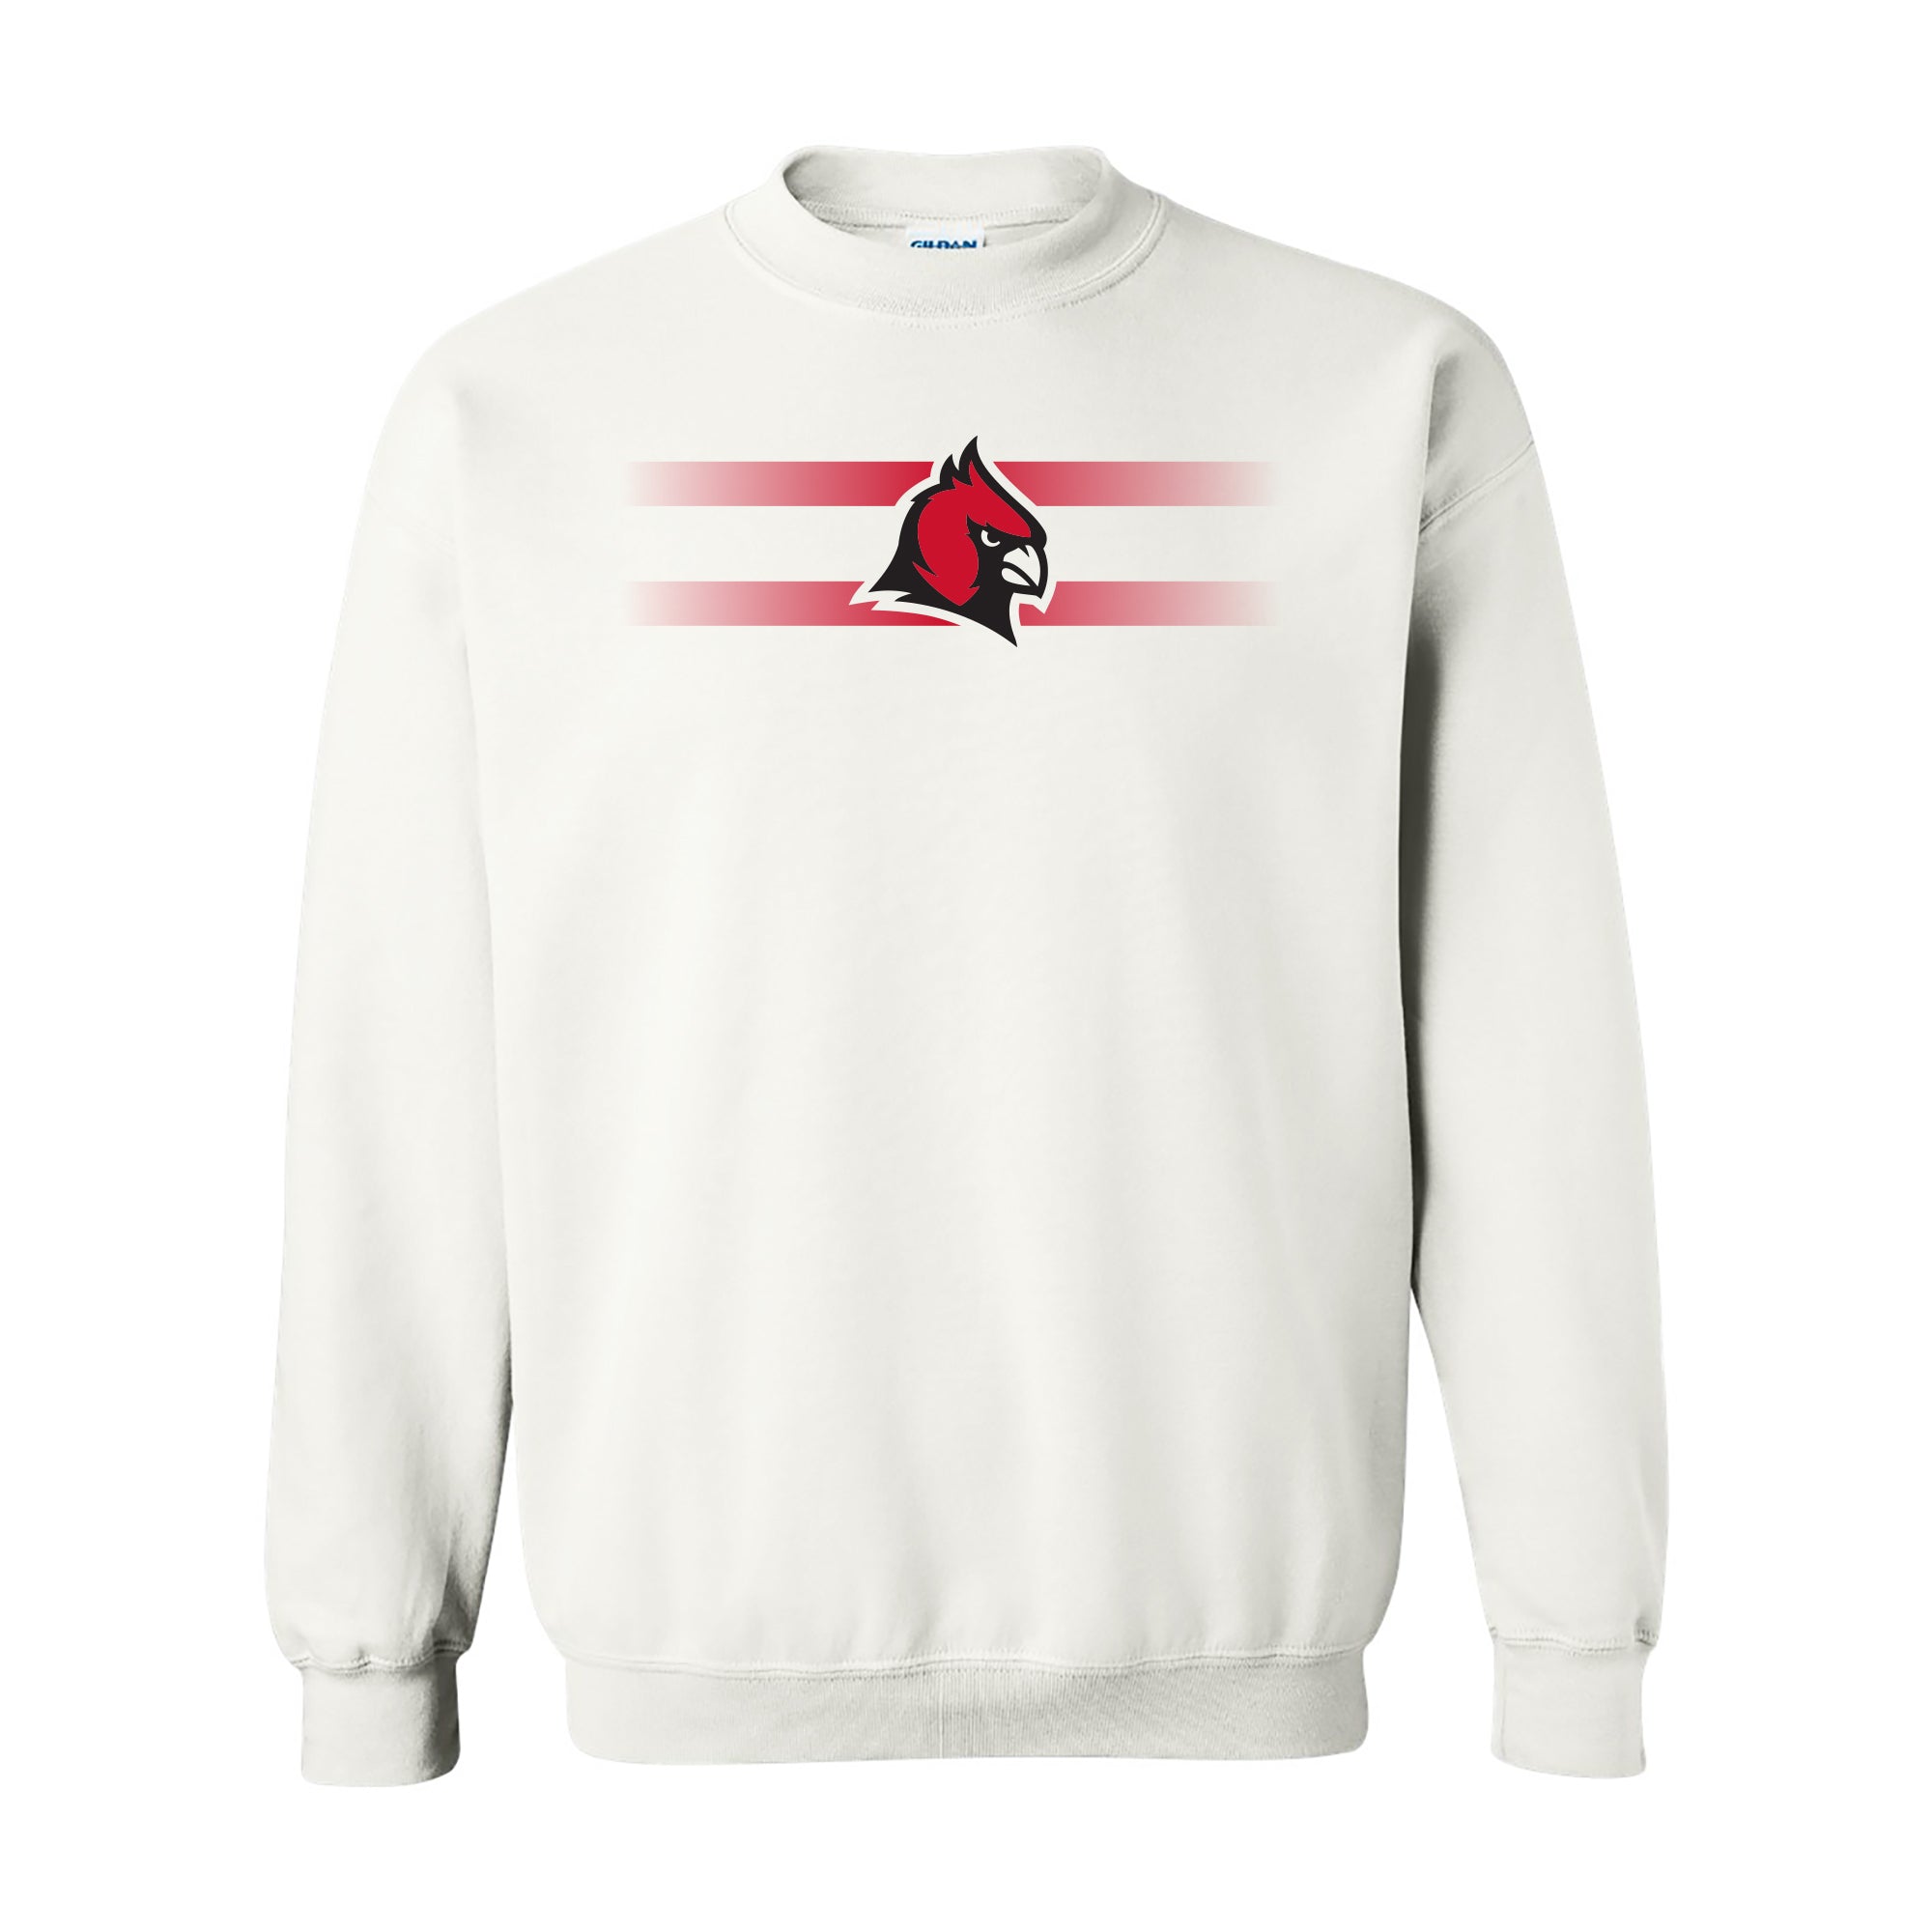 Concordia Cardinal Head Crewneck Sweatshirt - White